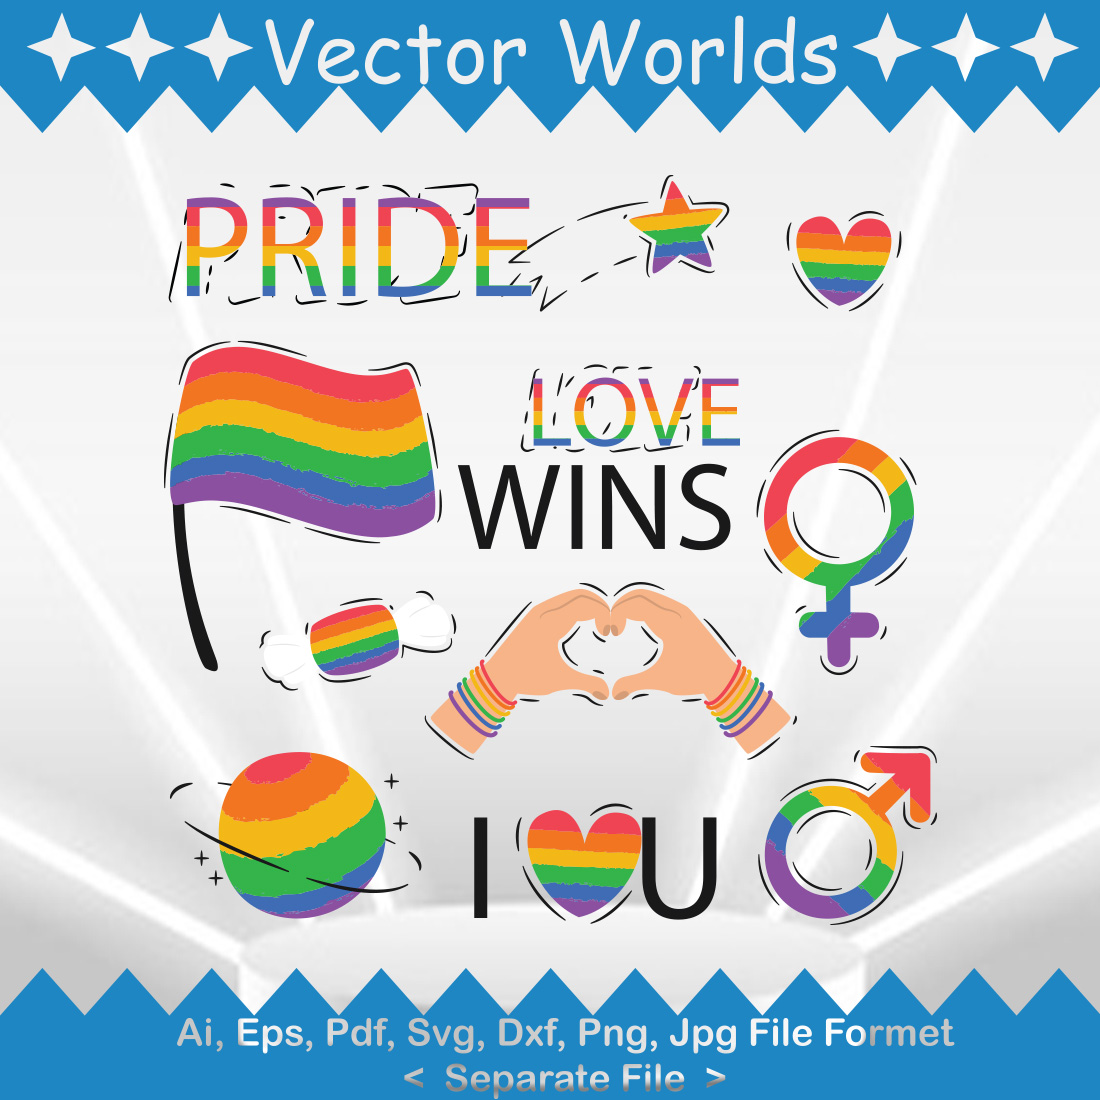 LGBT SVG Vector Design cover image.